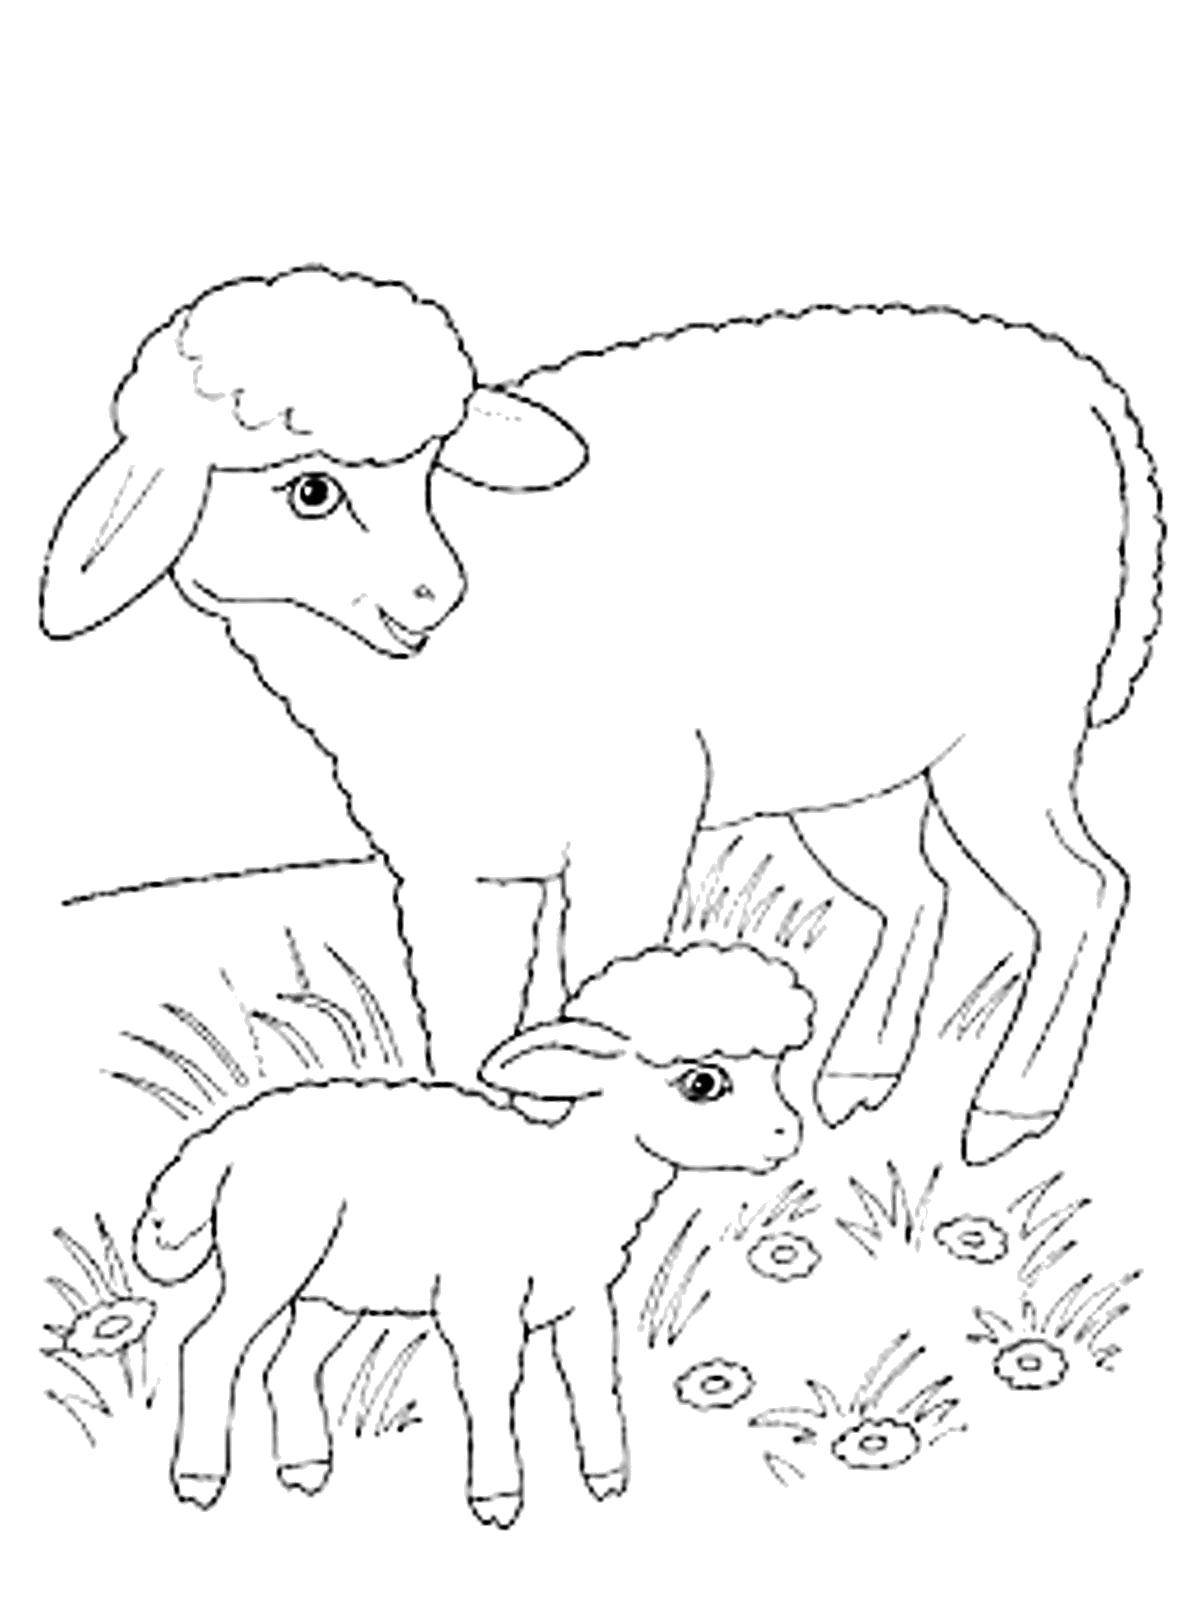 Опис: розмальовки  Мама овечка з ягням. Категорія: домашні тварини. Теги:  Тварини, овечка.